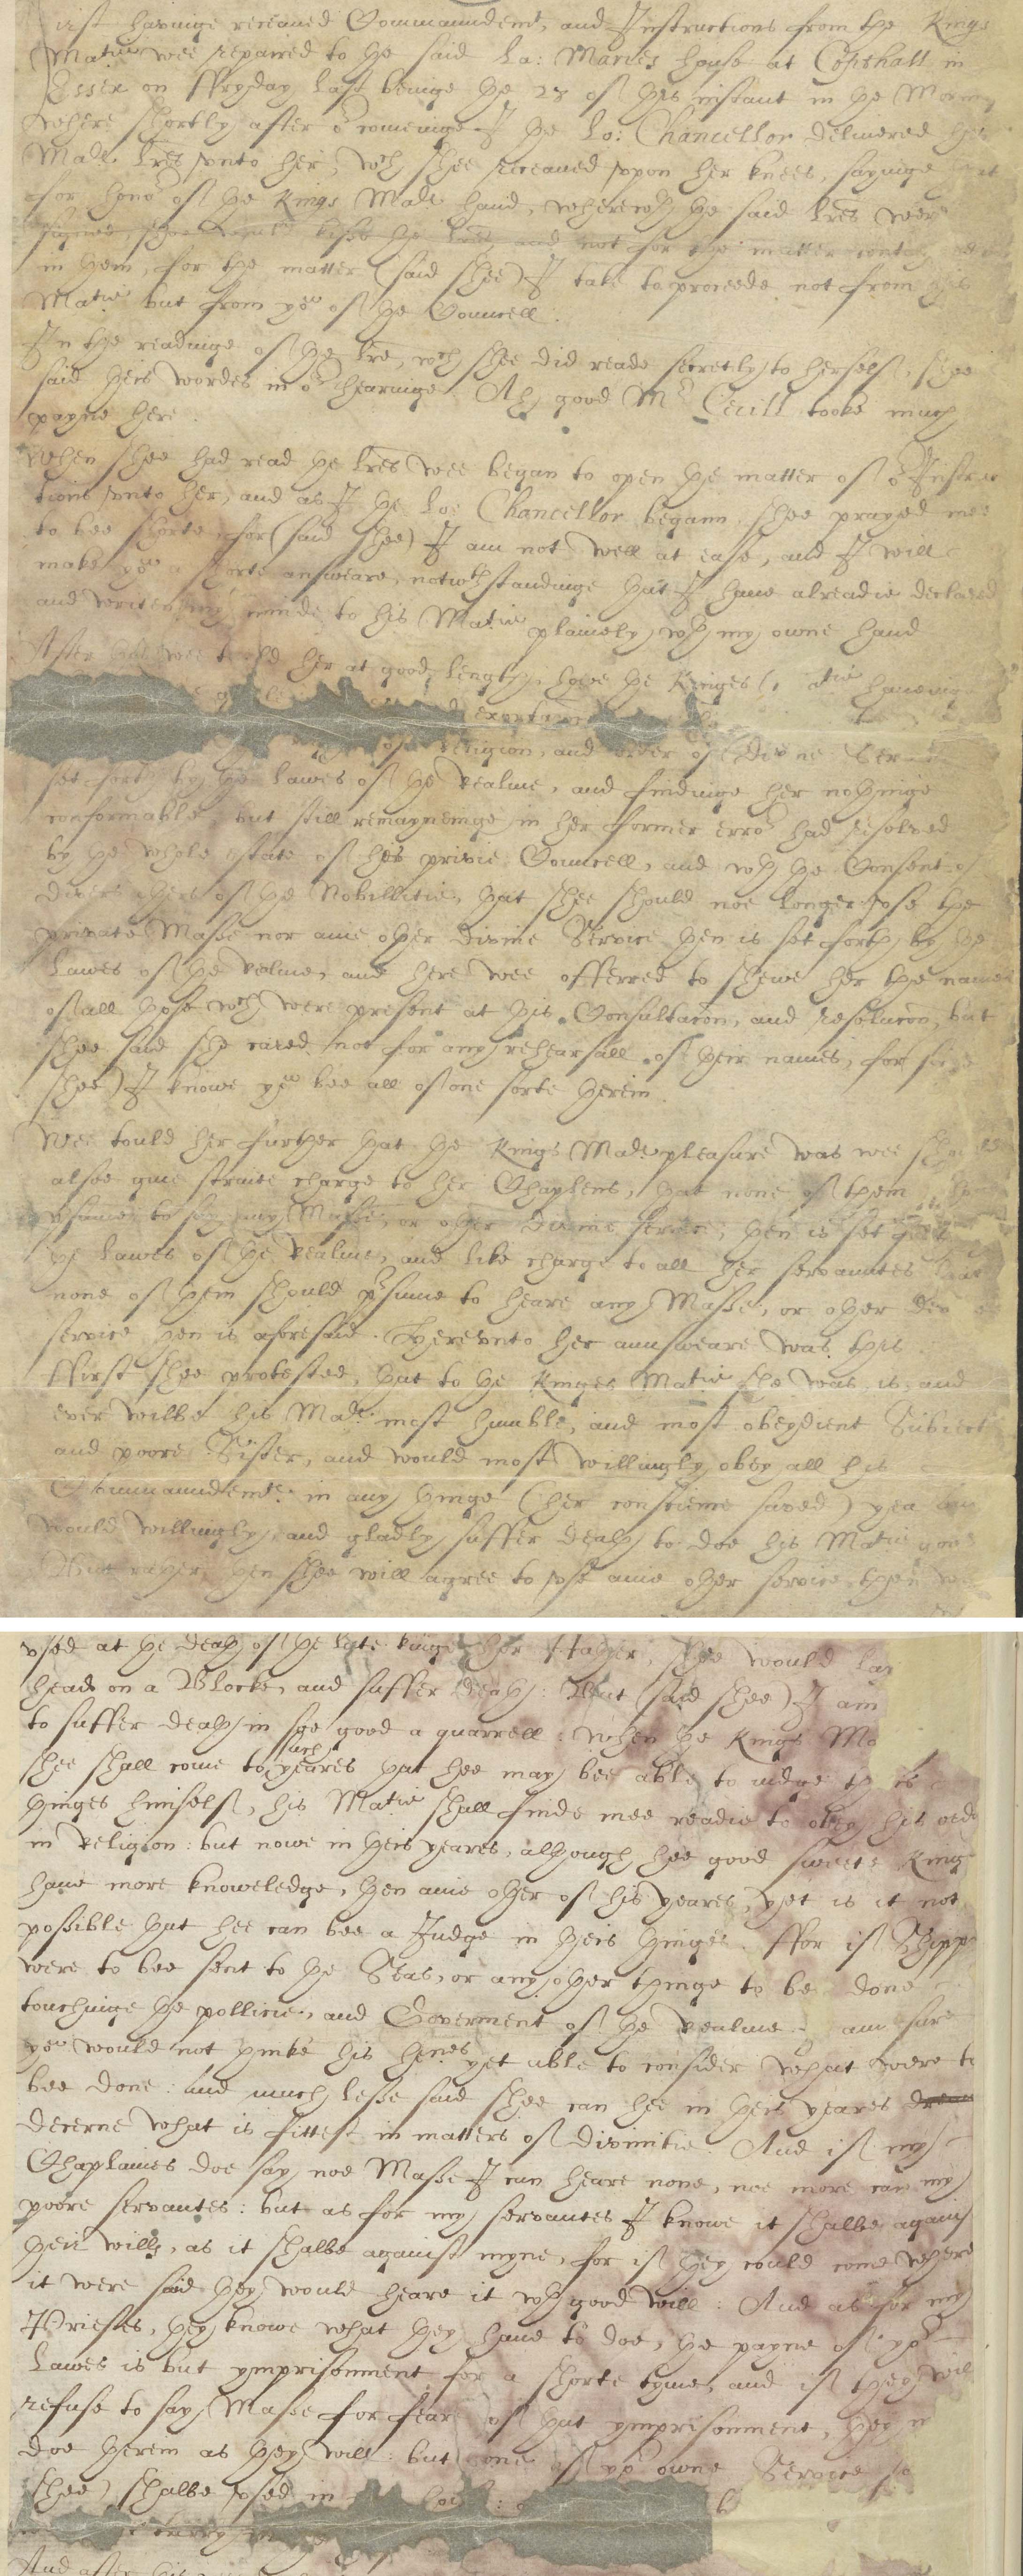 Mary writes to Edward VI